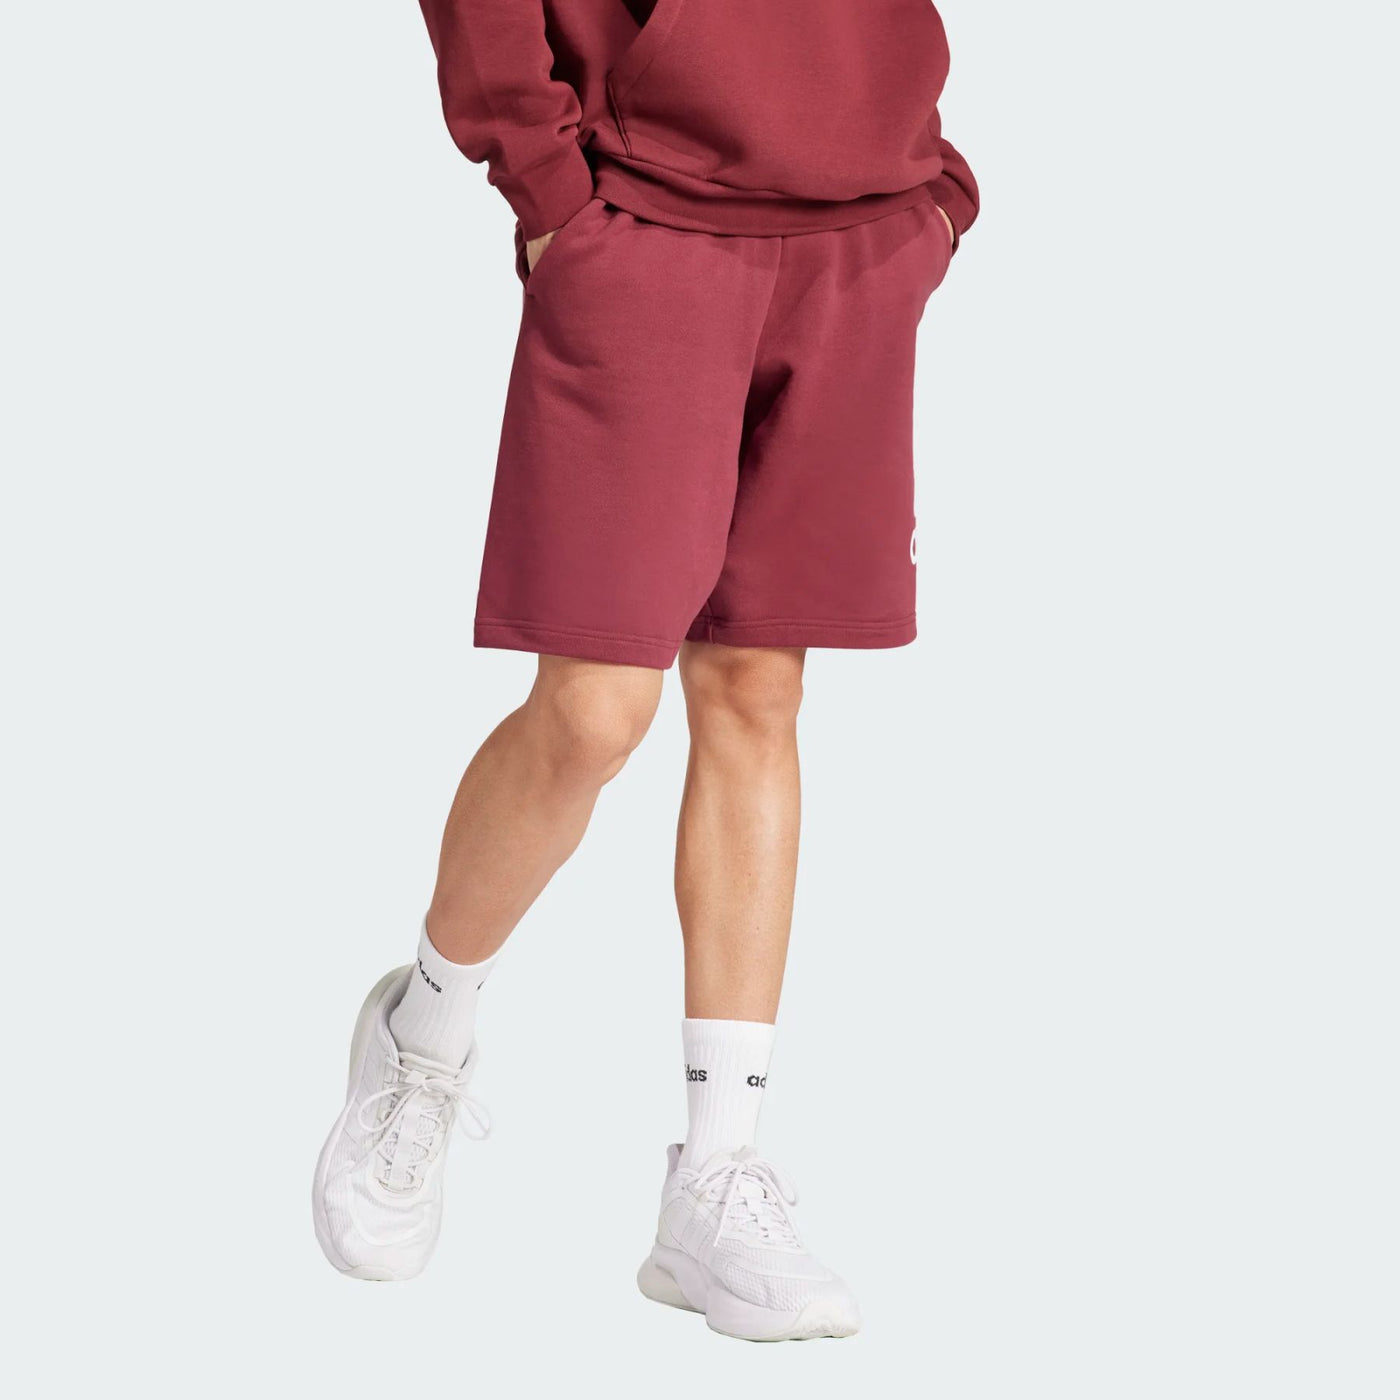 IR9987 - Shorts - Adidas